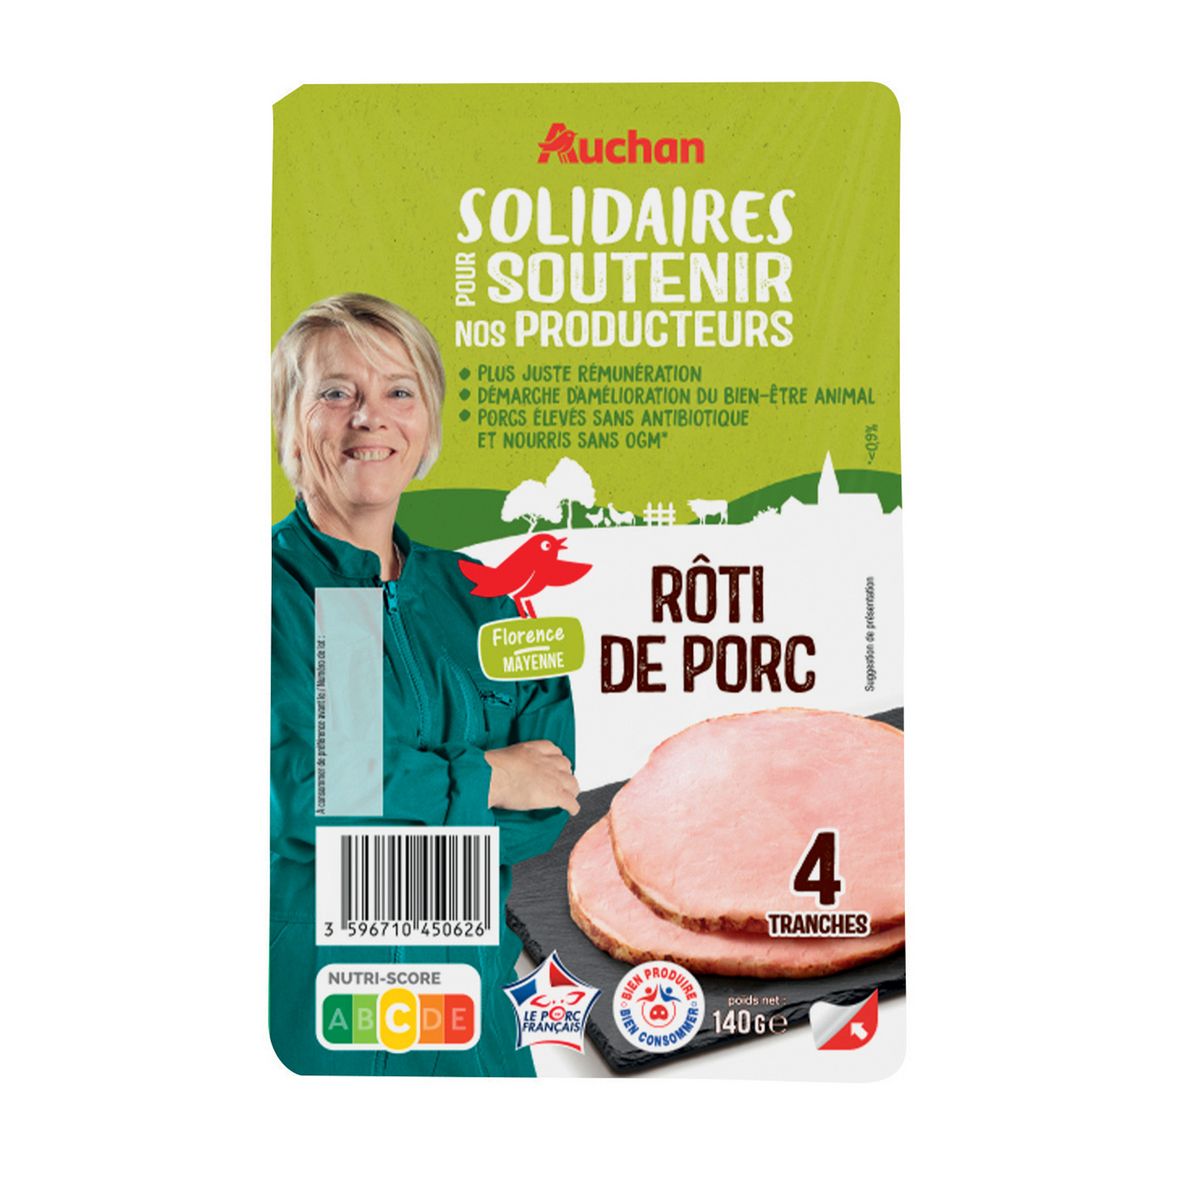 AUCHAN SOLIDAIRES Rôti de porc  4 tranches 140g